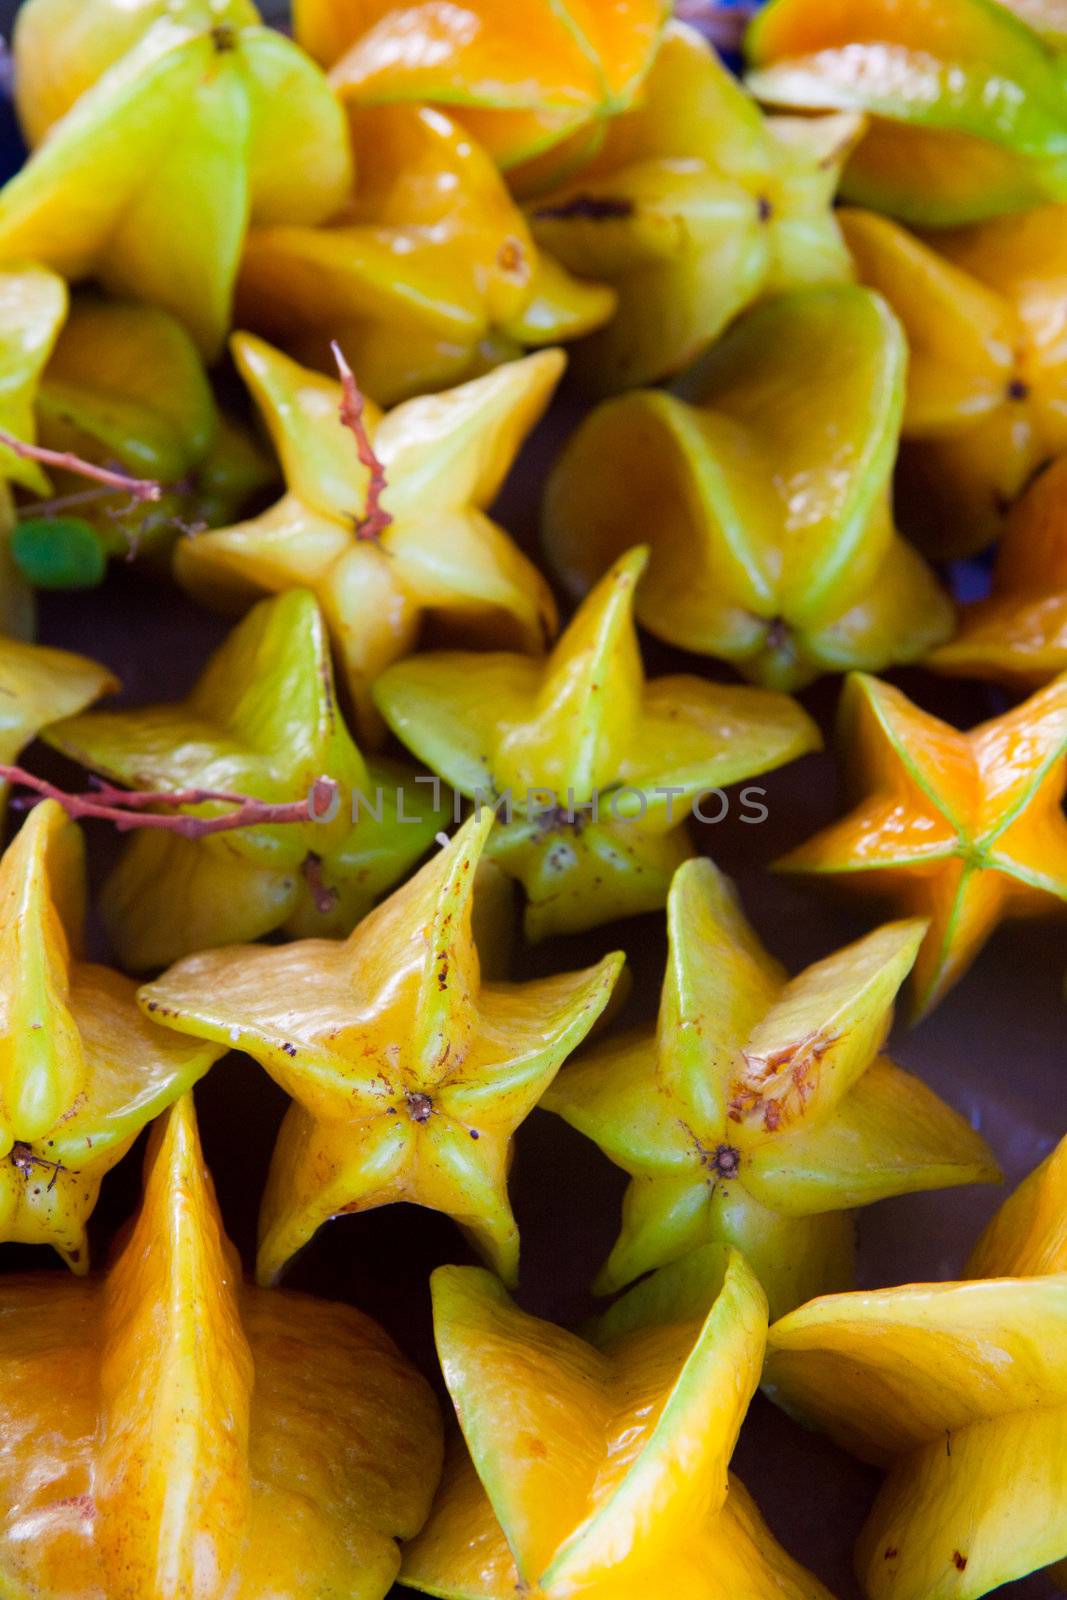 Hawaiian starfruit are stacked together at an organic market along the north shore of oahu hawaii.